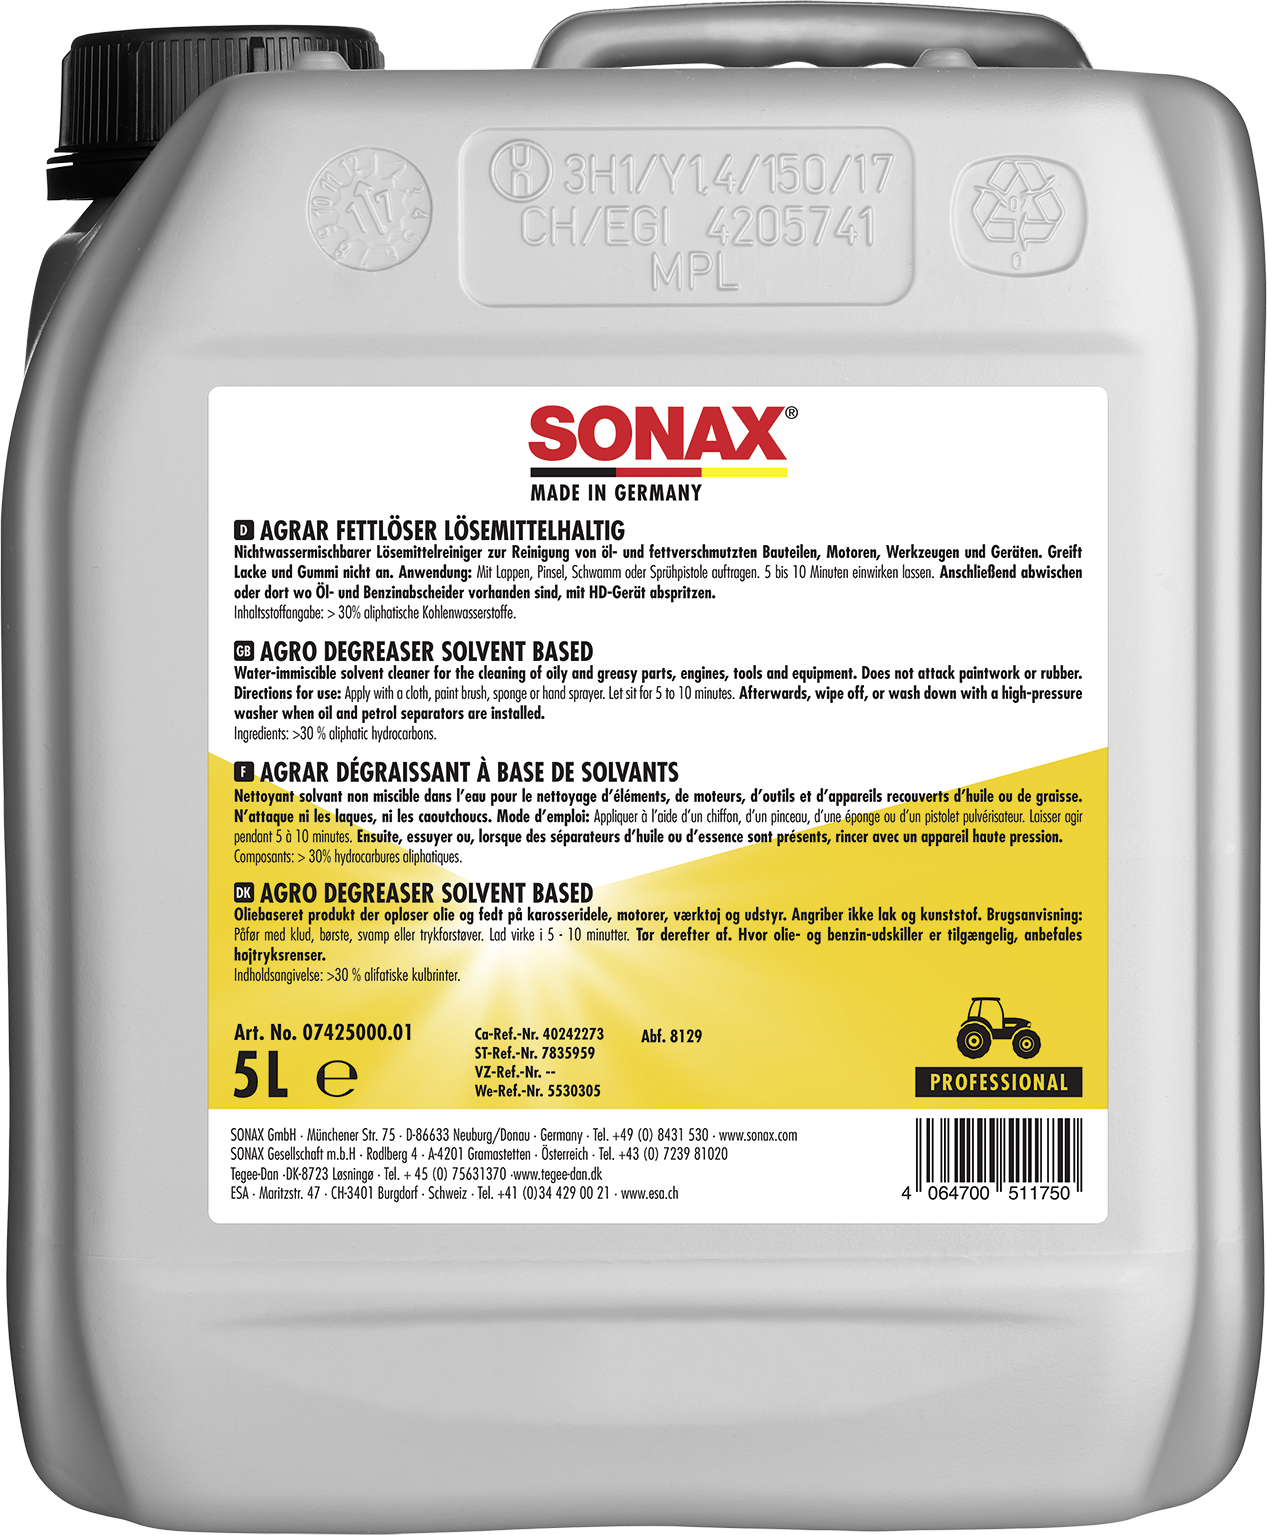 SONAX AGRAR FettLöser lösemittelhaltig - Weigola Hygienevertrieb